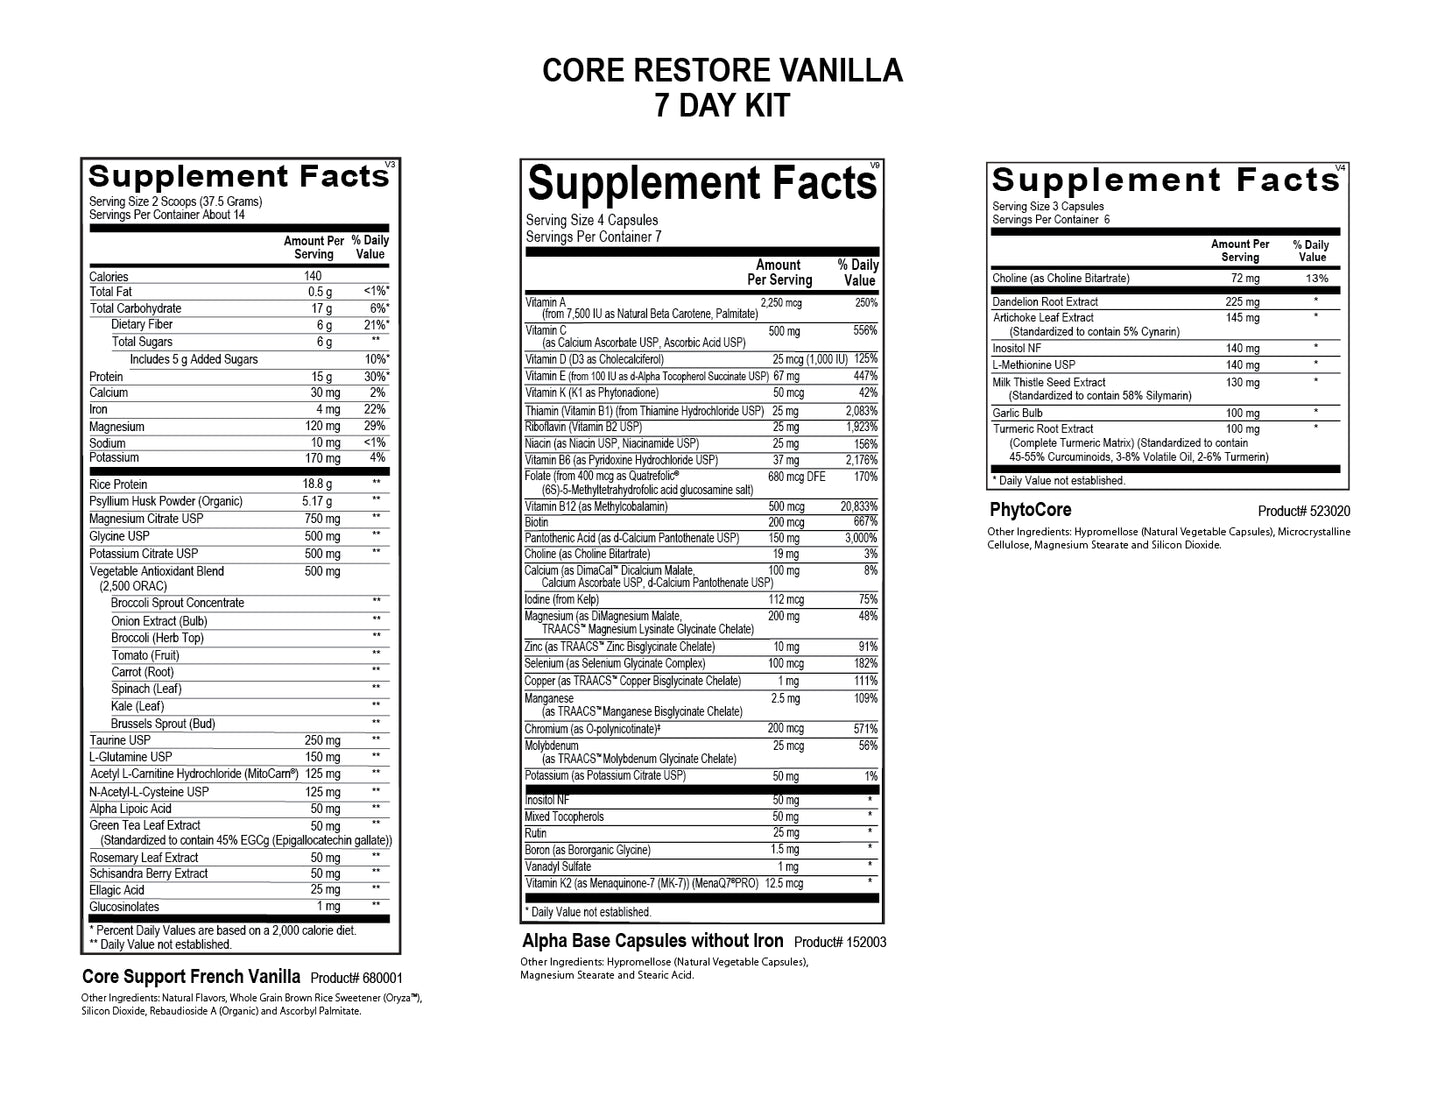 Core Restore 7 day kit - French Vanilla